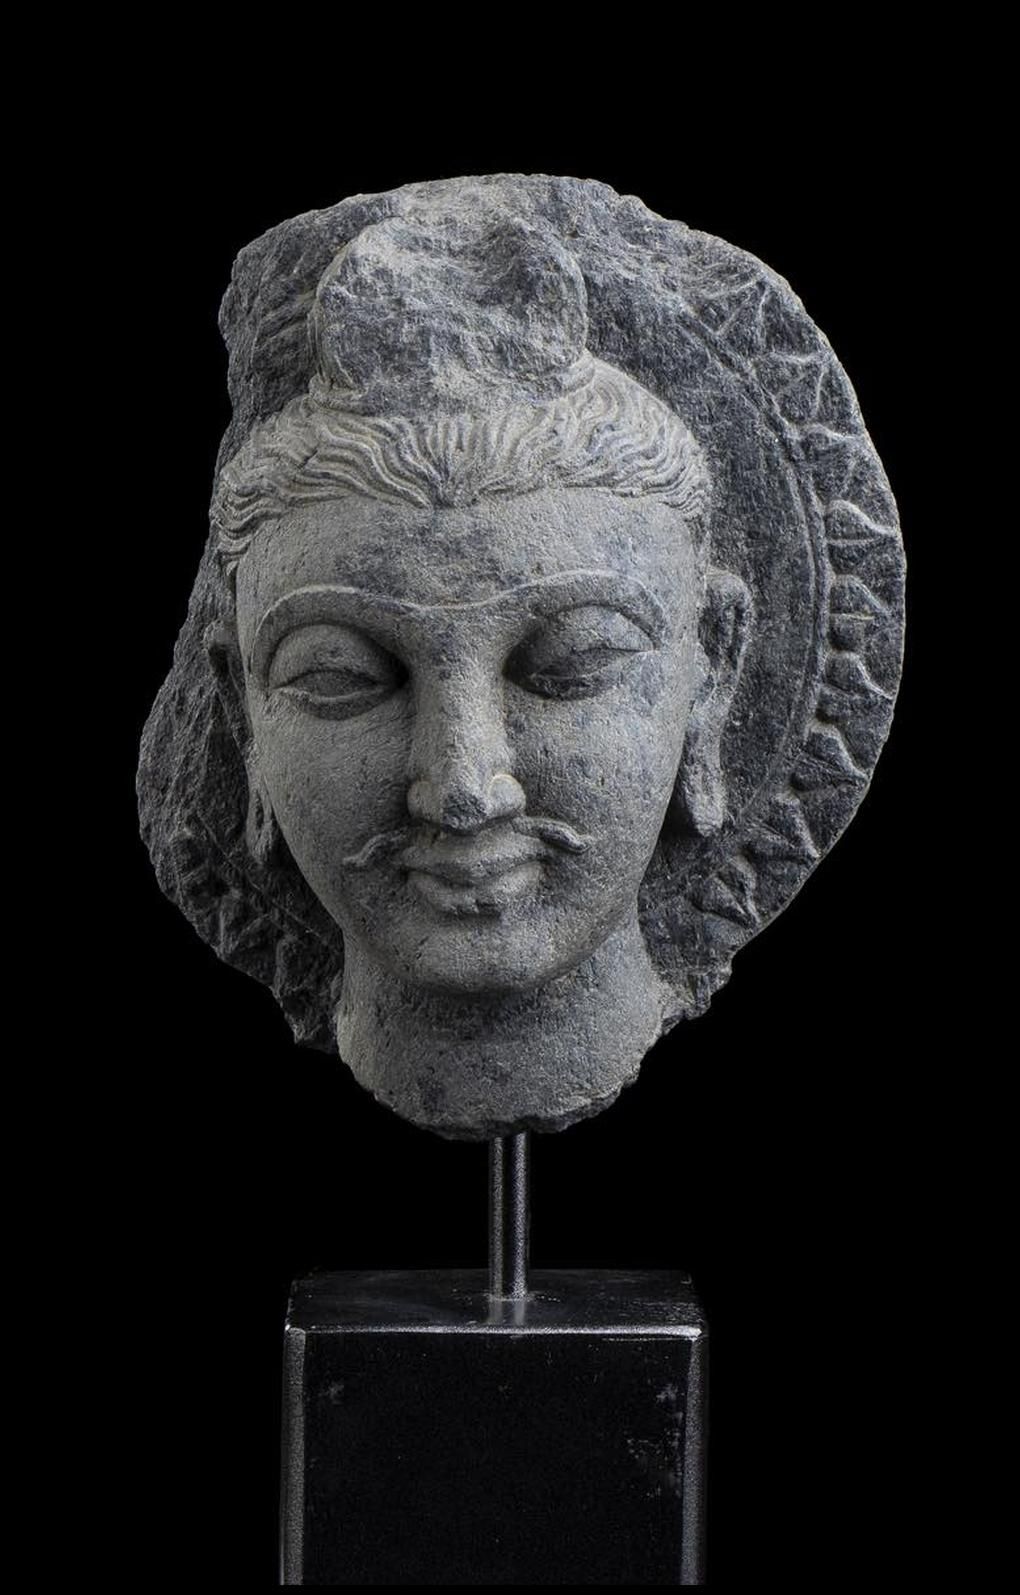 A STONE BUDDHA HEAD CABEZA DE BUDA DE PIEDRA 
Estilo Gandhara

18 x 14 cm

Proce&hellip;